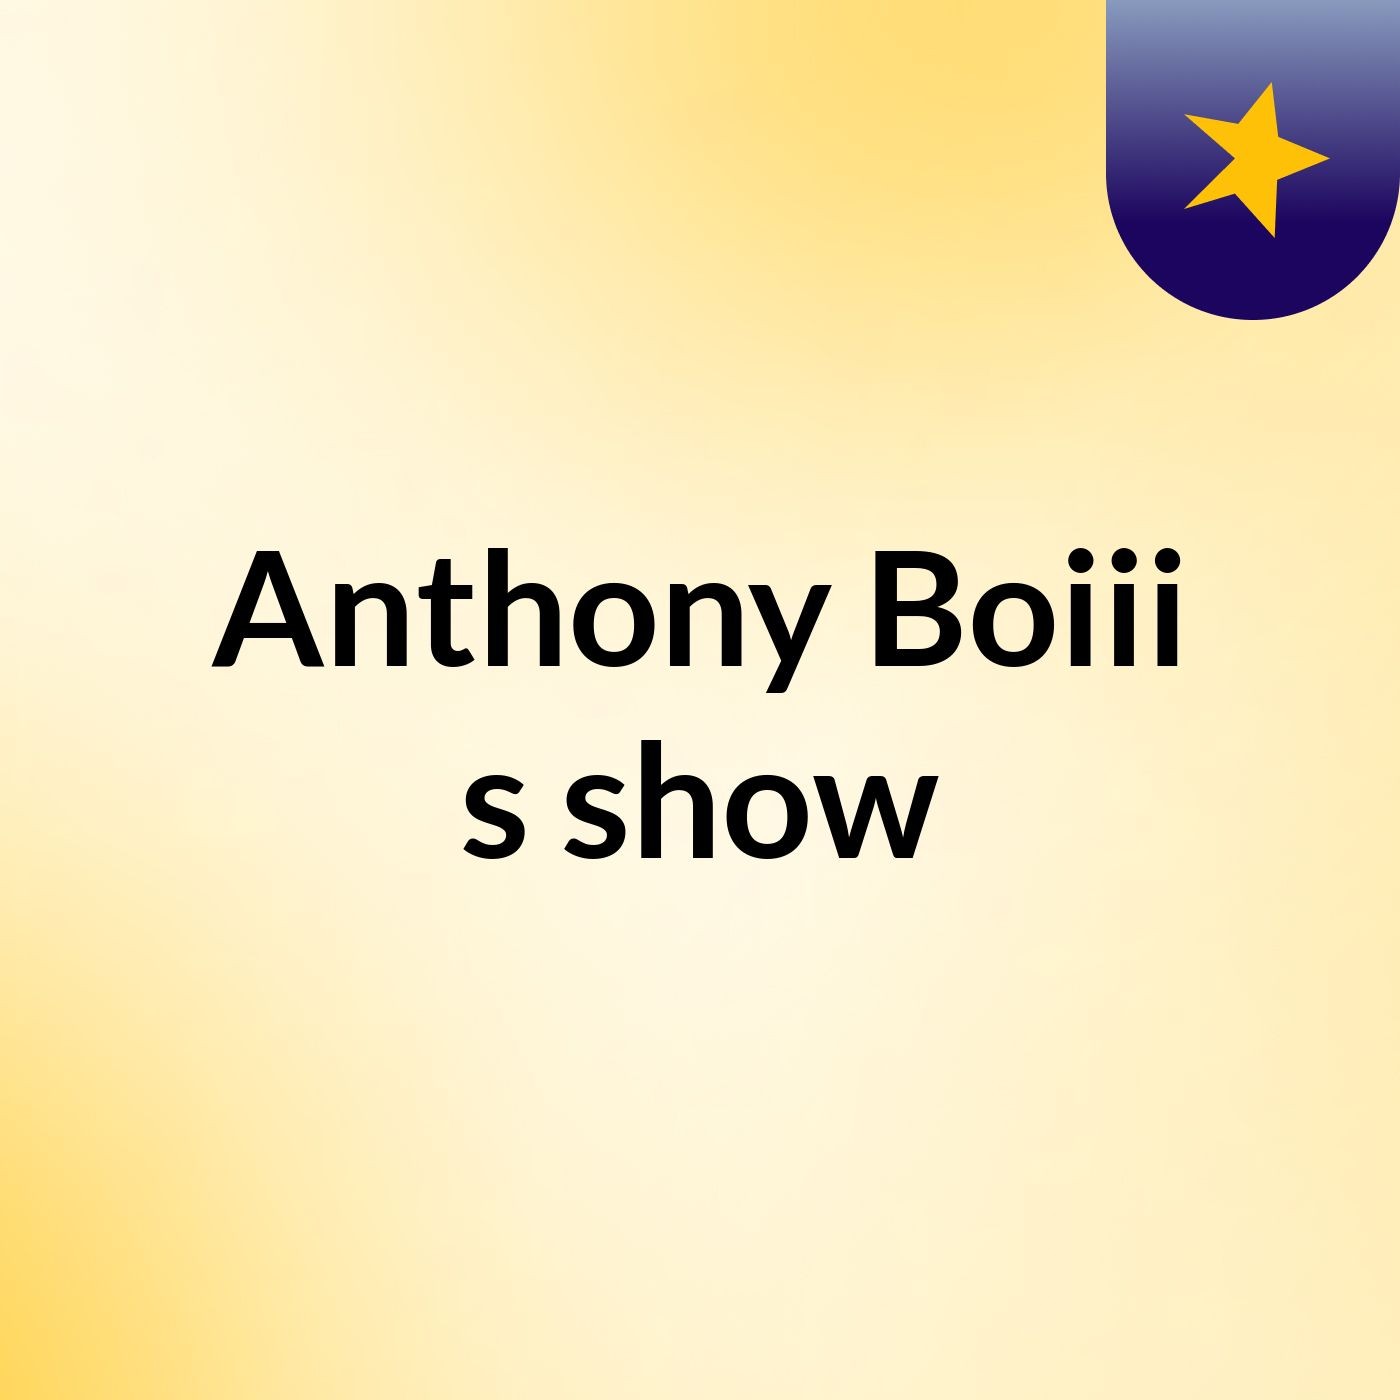 Anthony Boiii's show